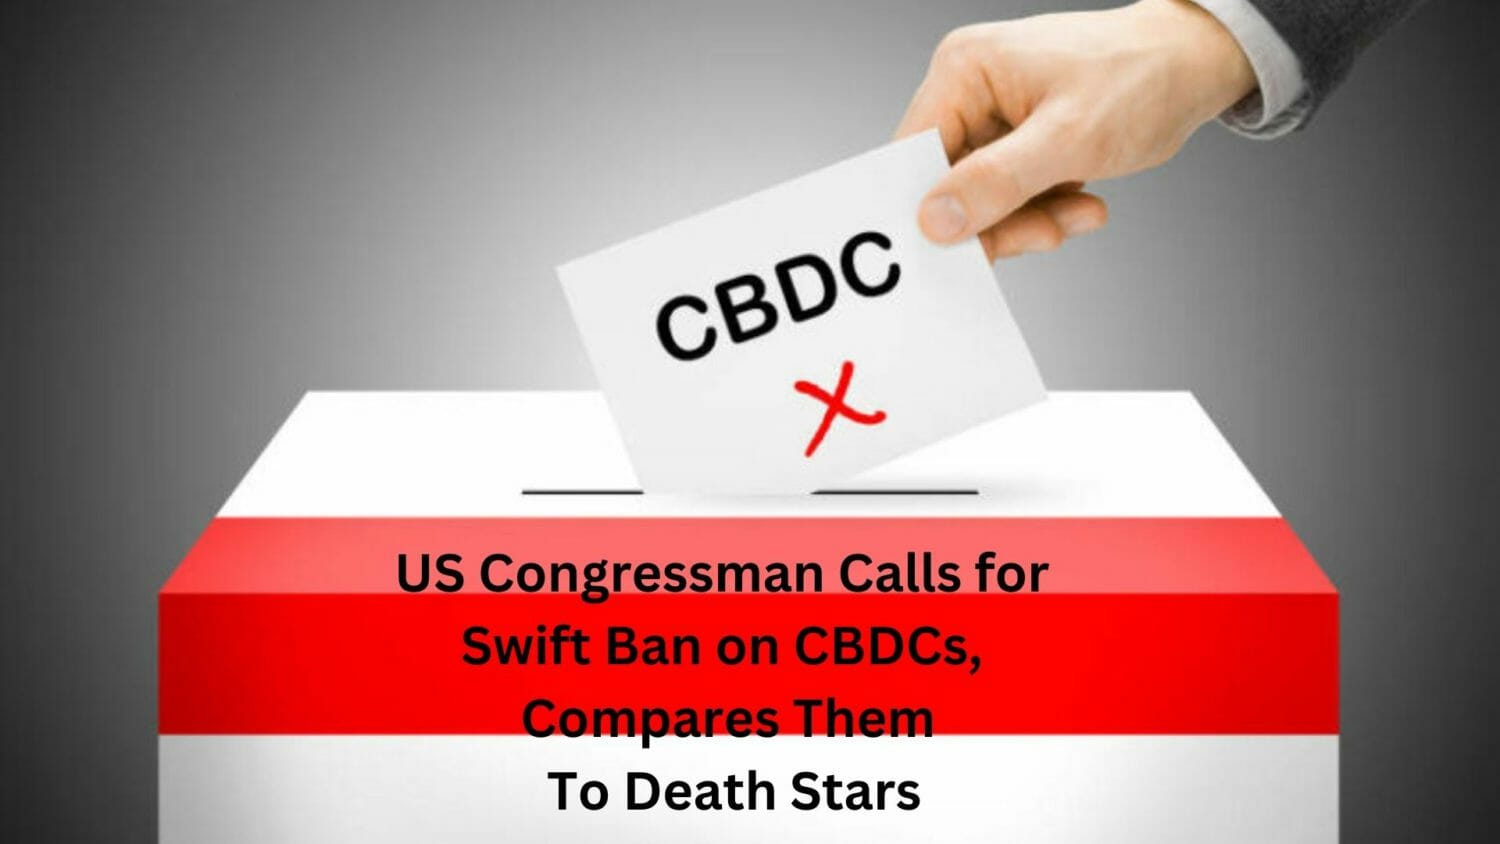 Us Congressman Calls For Swift Ban On Cbdcs, Compares Them To Death Stars